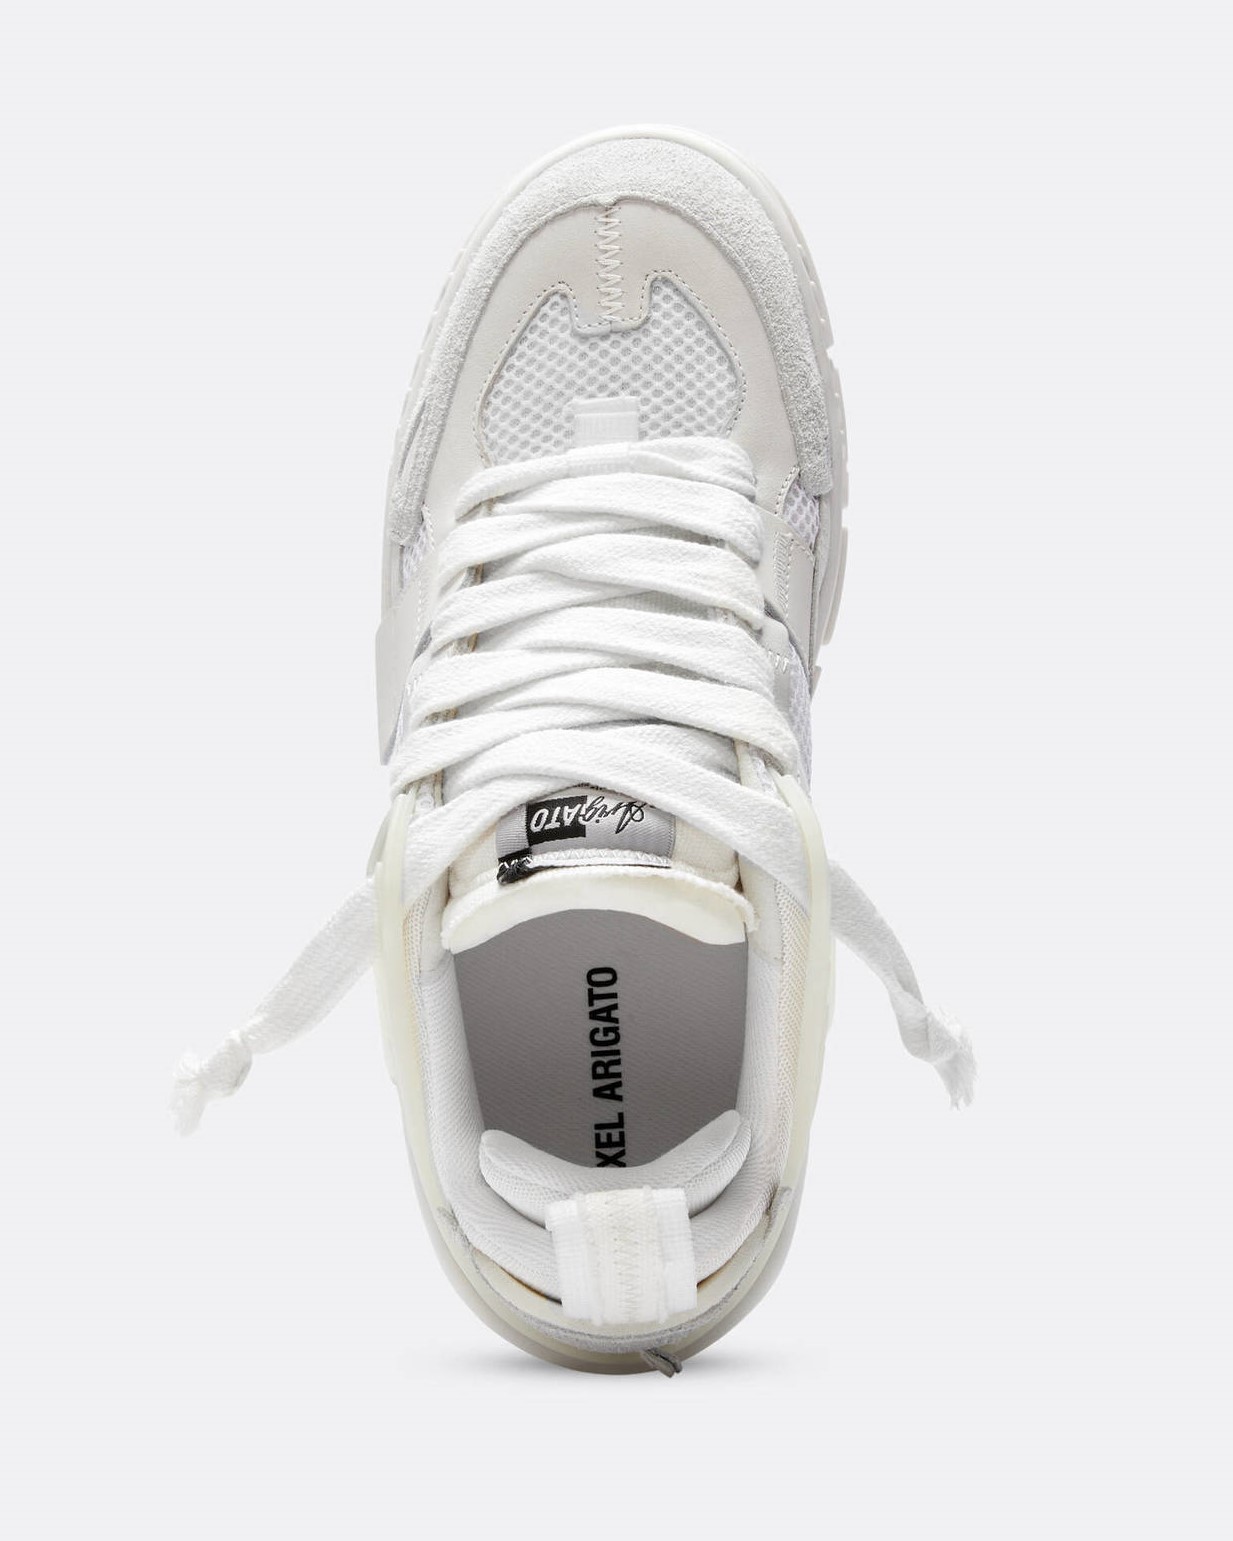 AXEL ARIGATO Area Patchwork Sneaker in White/White 37